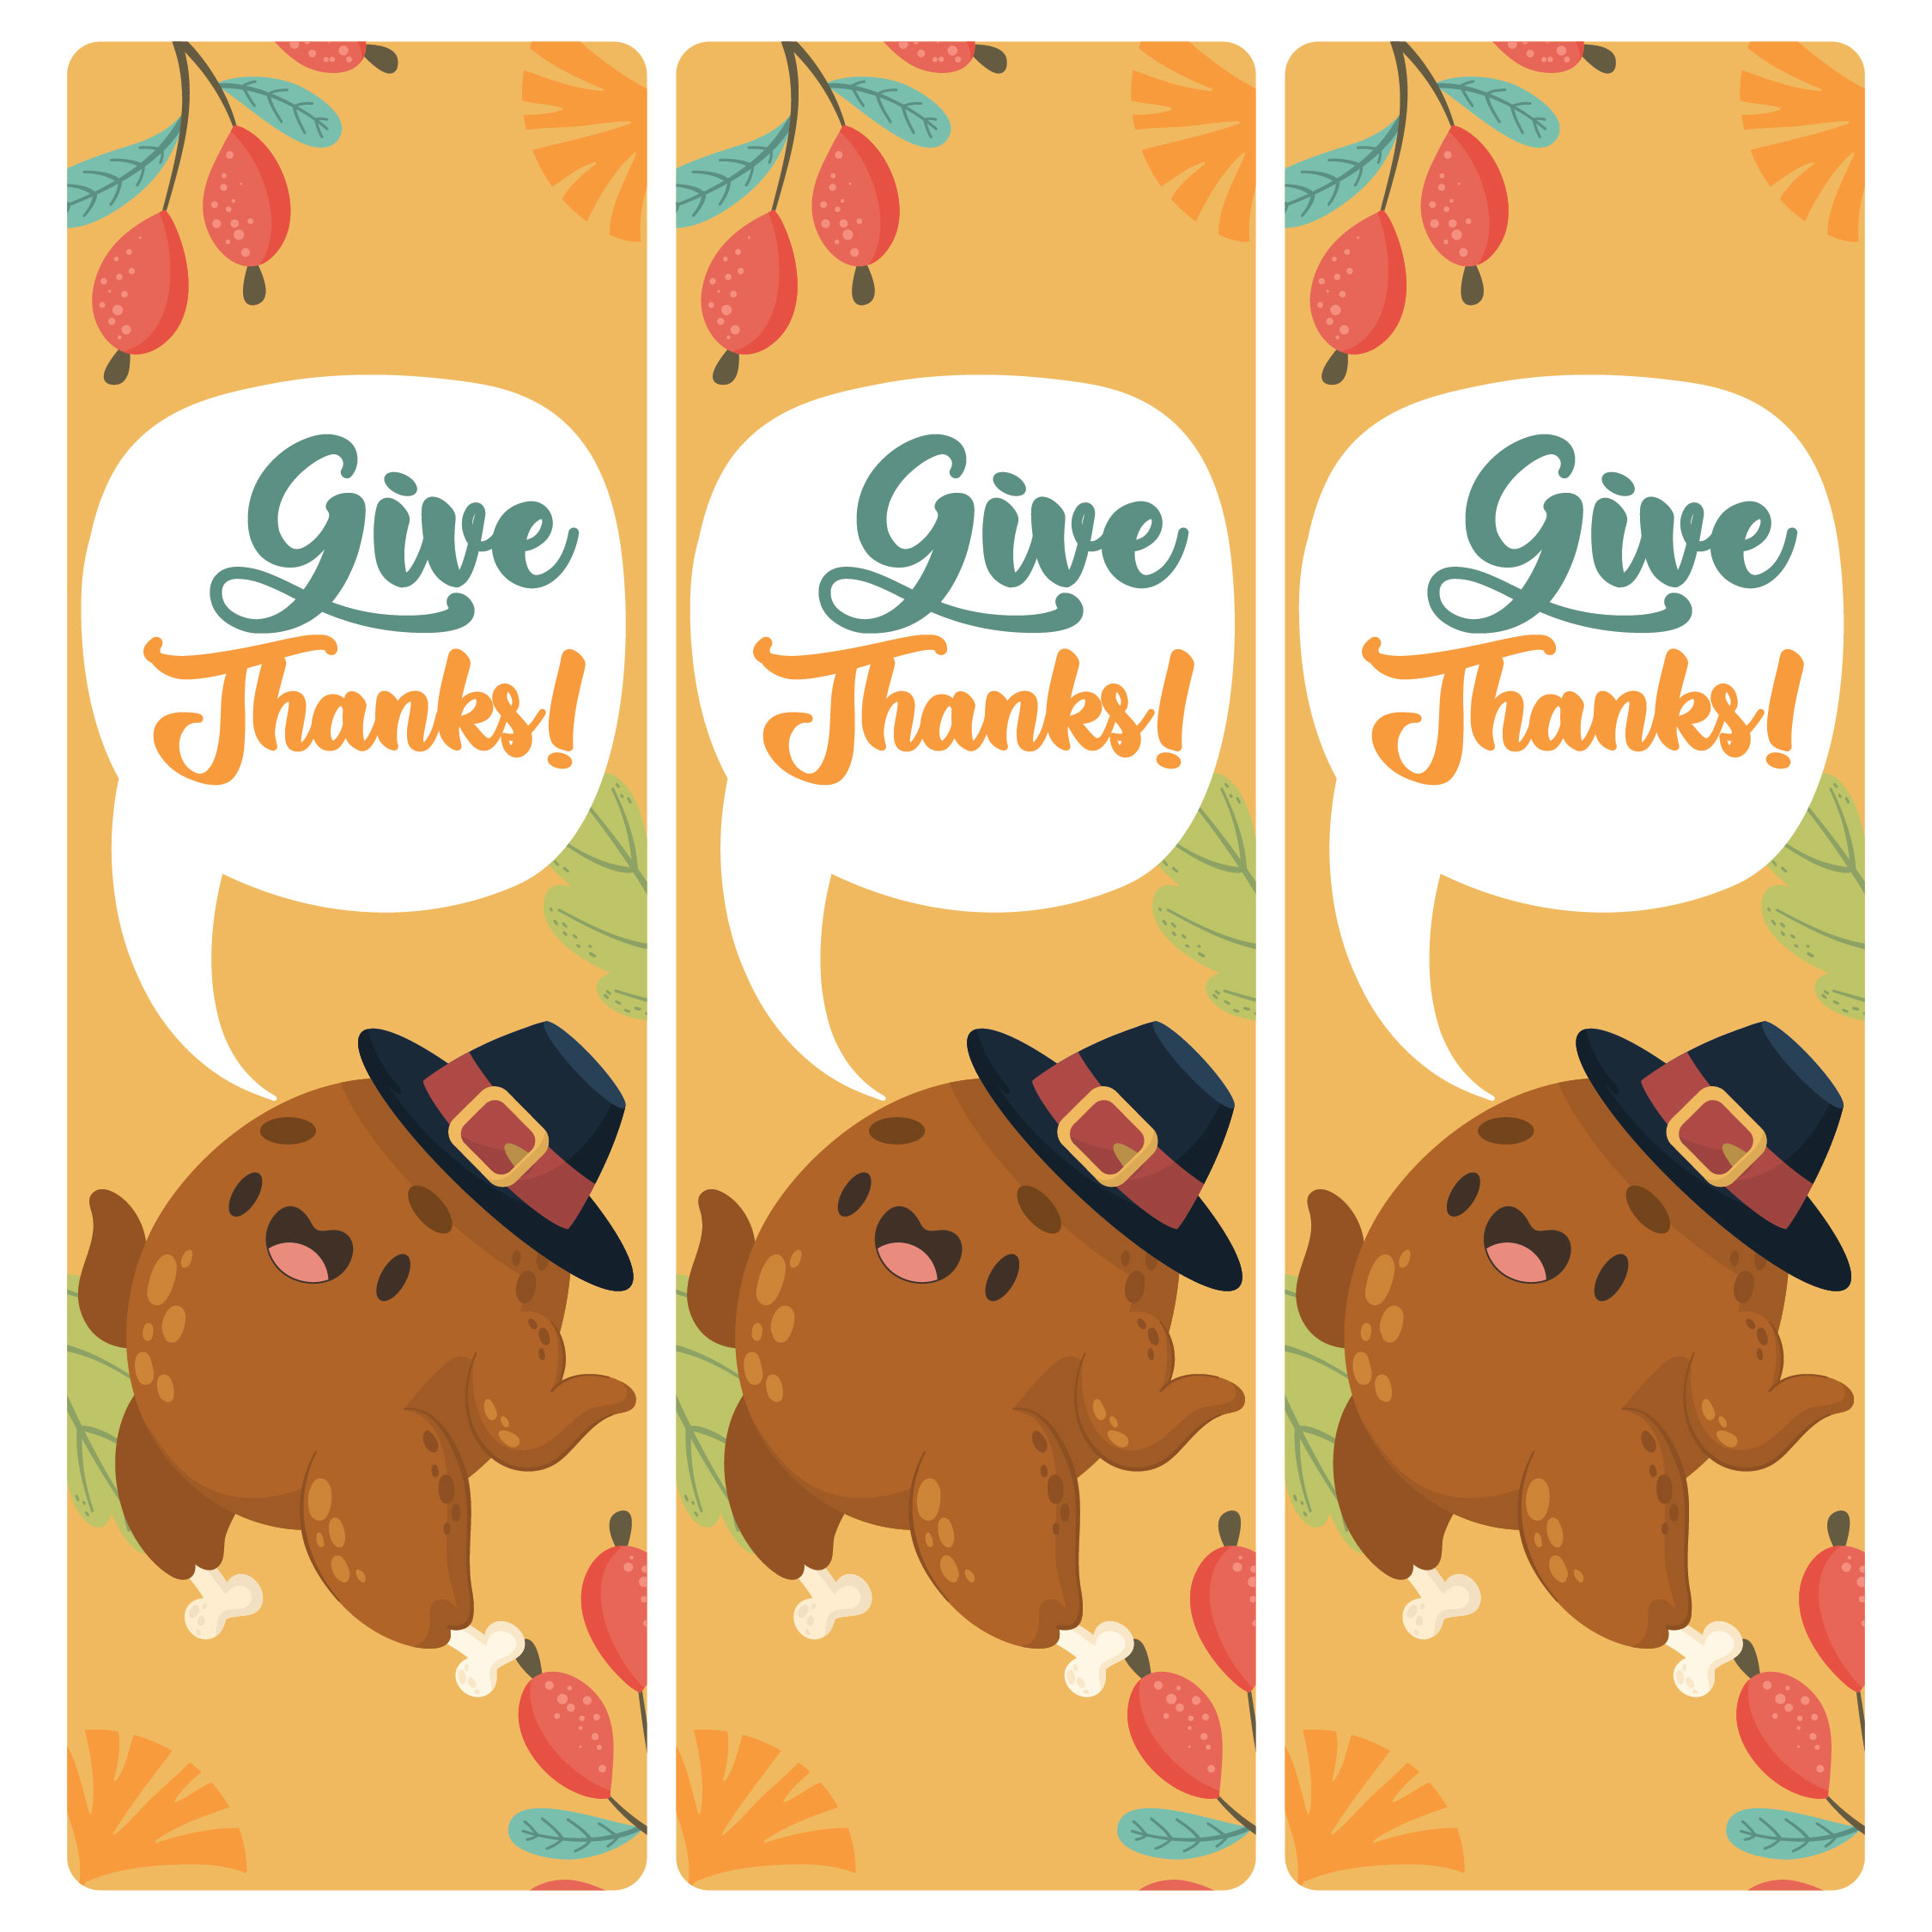 5 Best Printable Thanksgiving Bookmarks